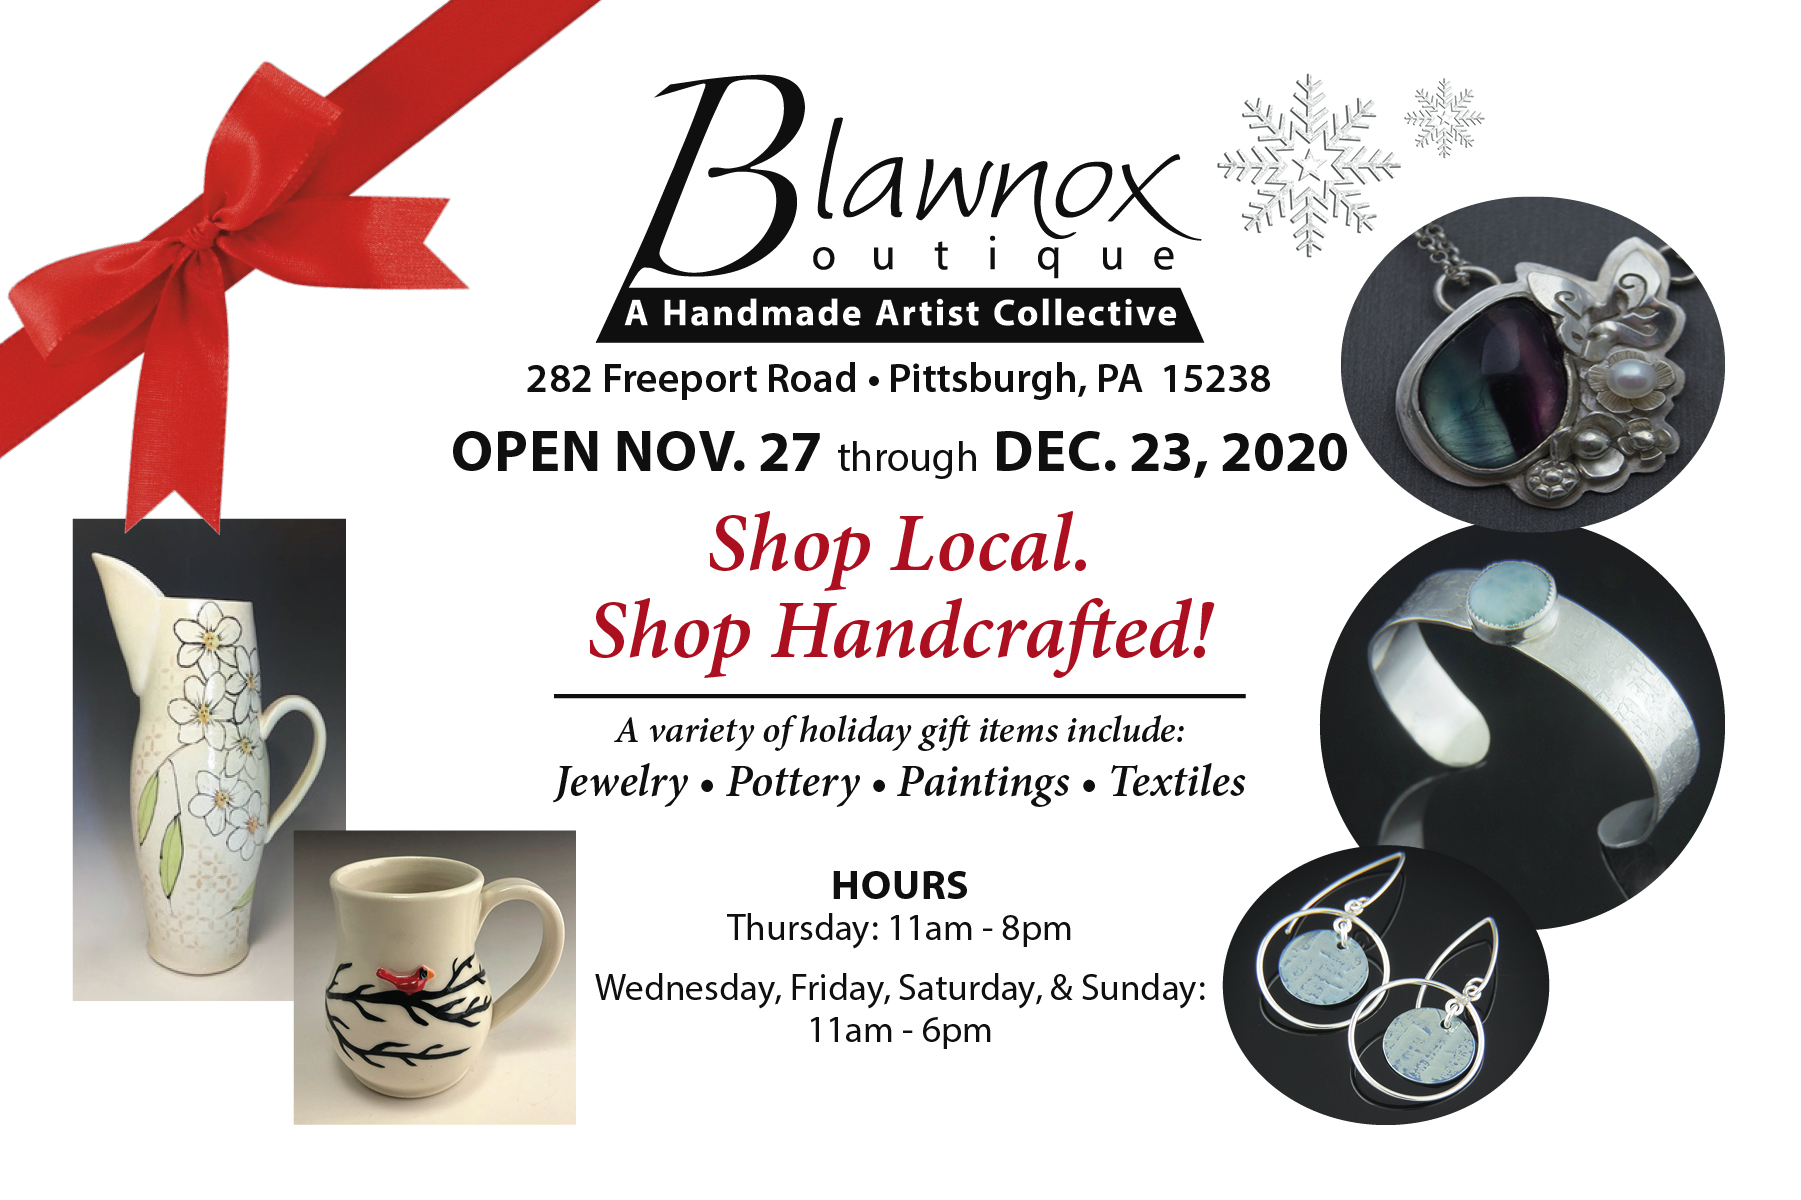 Blawnox Boutique open till Dec. 23